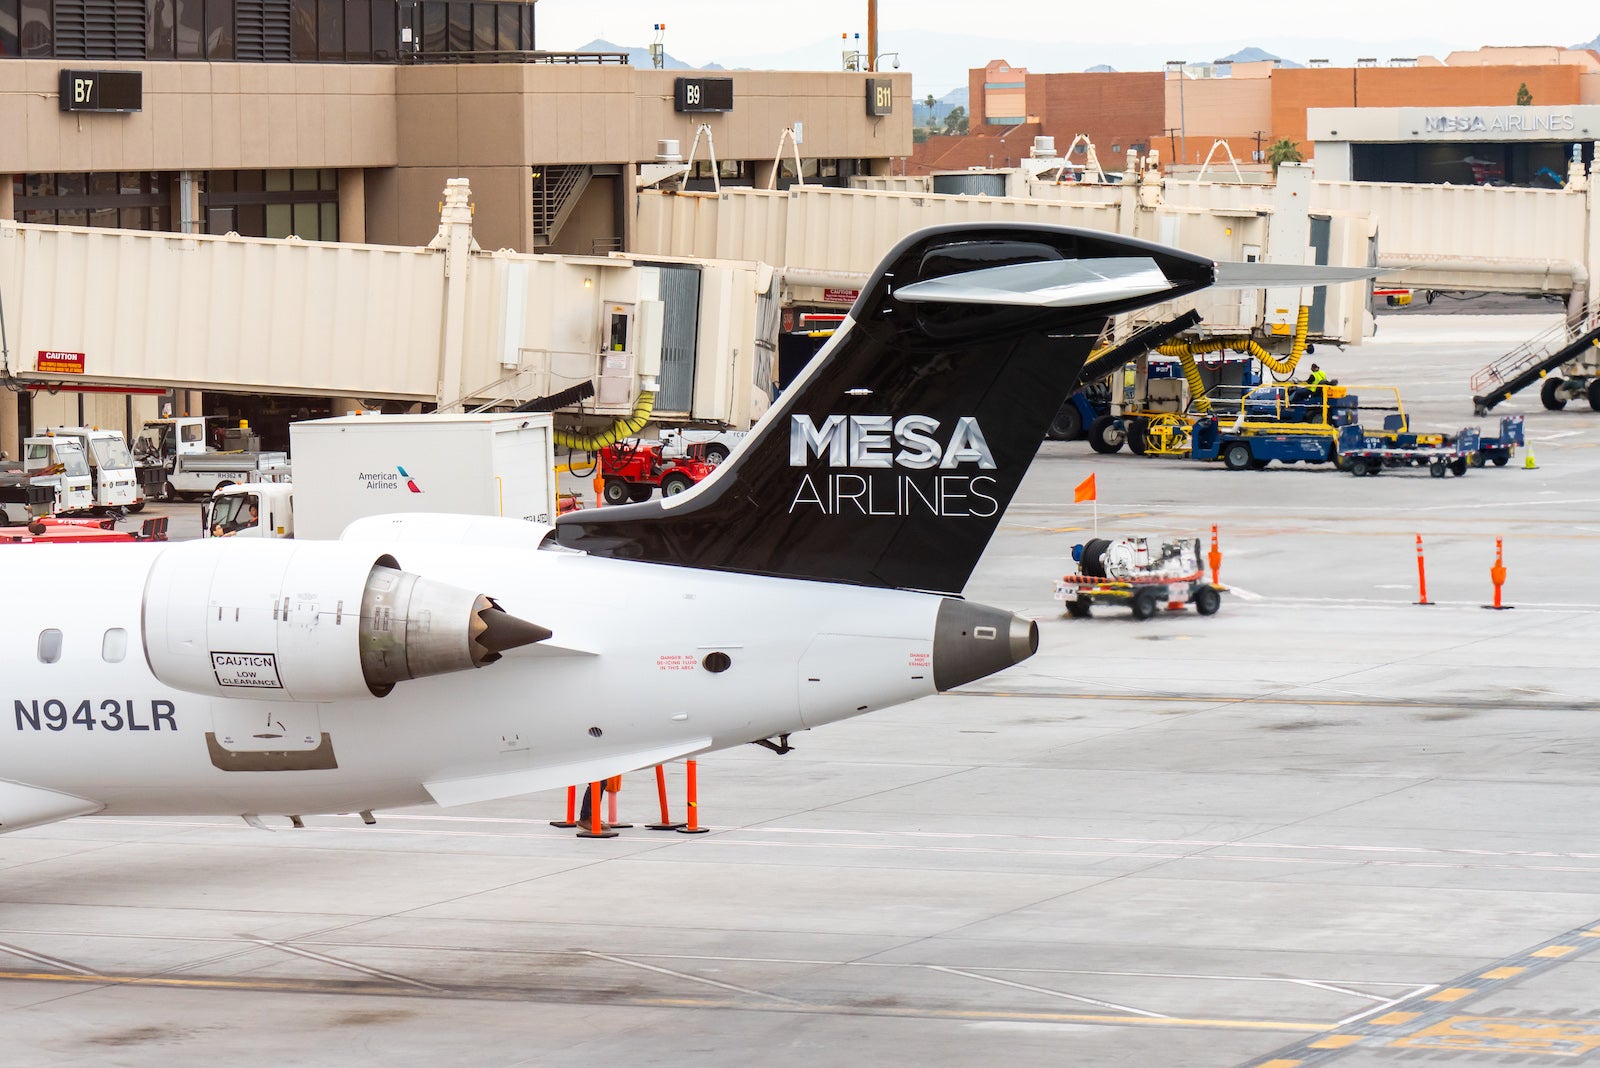 Mesa Airlines Bombardier CRJ-900ER aircraft seen at Phoenix